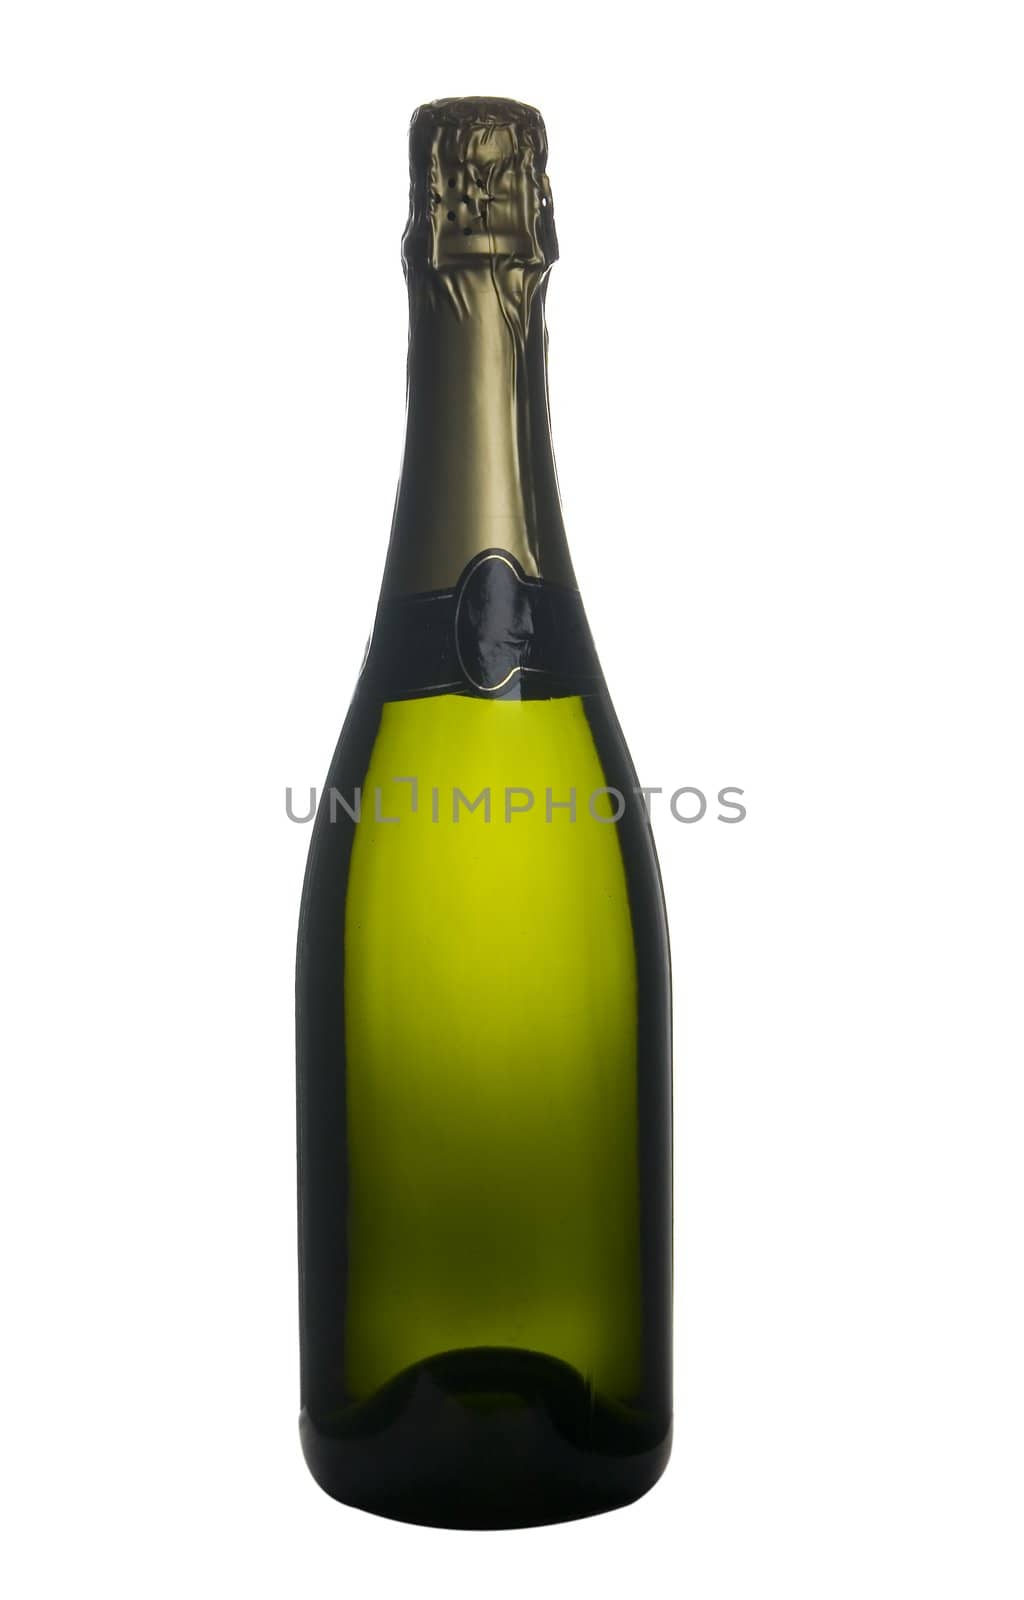 Champagne bottle celebration by Trebuchet